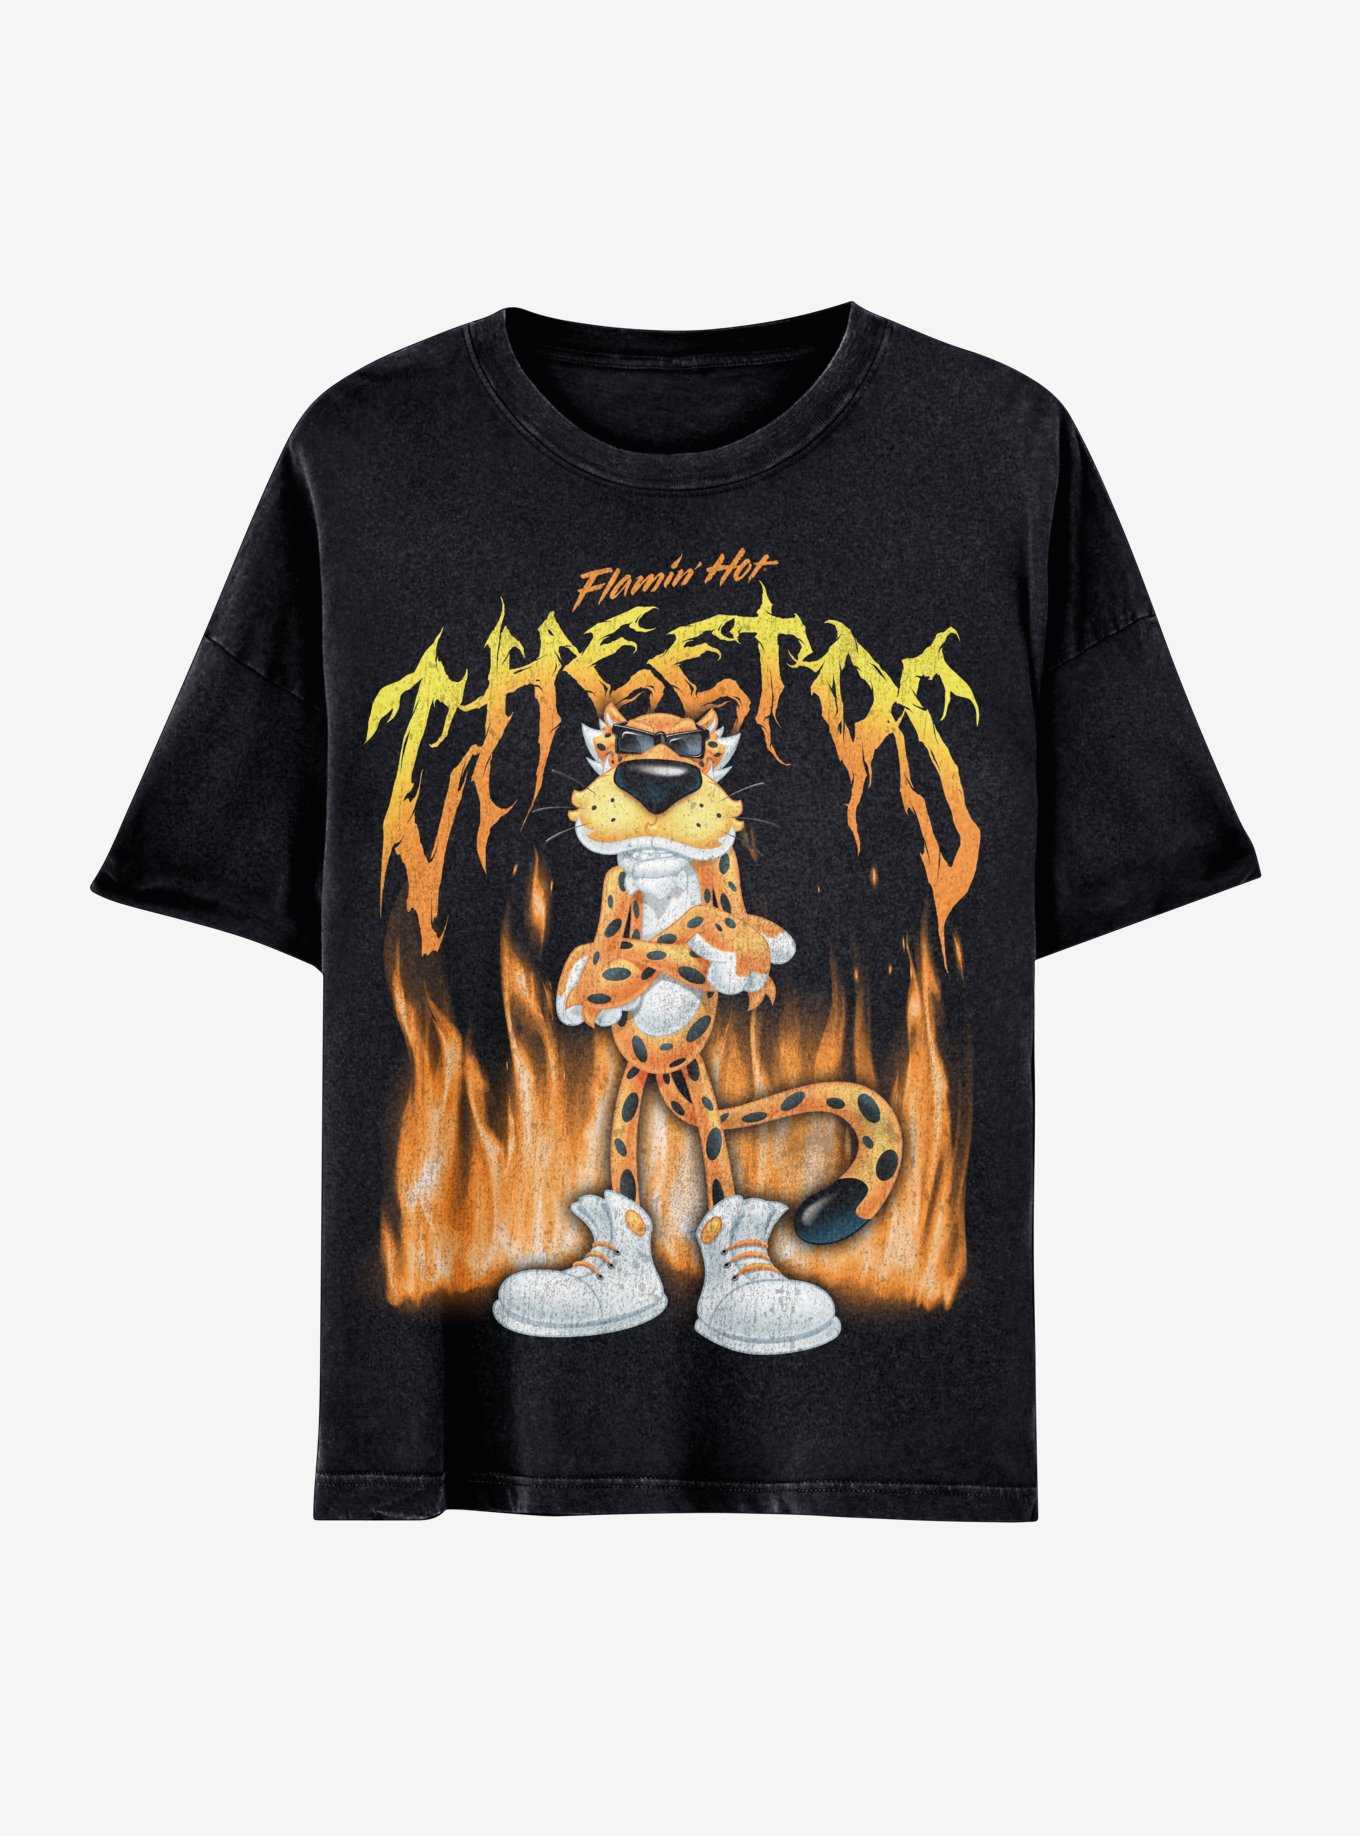 Flamin' Hot Cheetos Metal Boyfriend Fit Girls T-Shirt, , hi-res